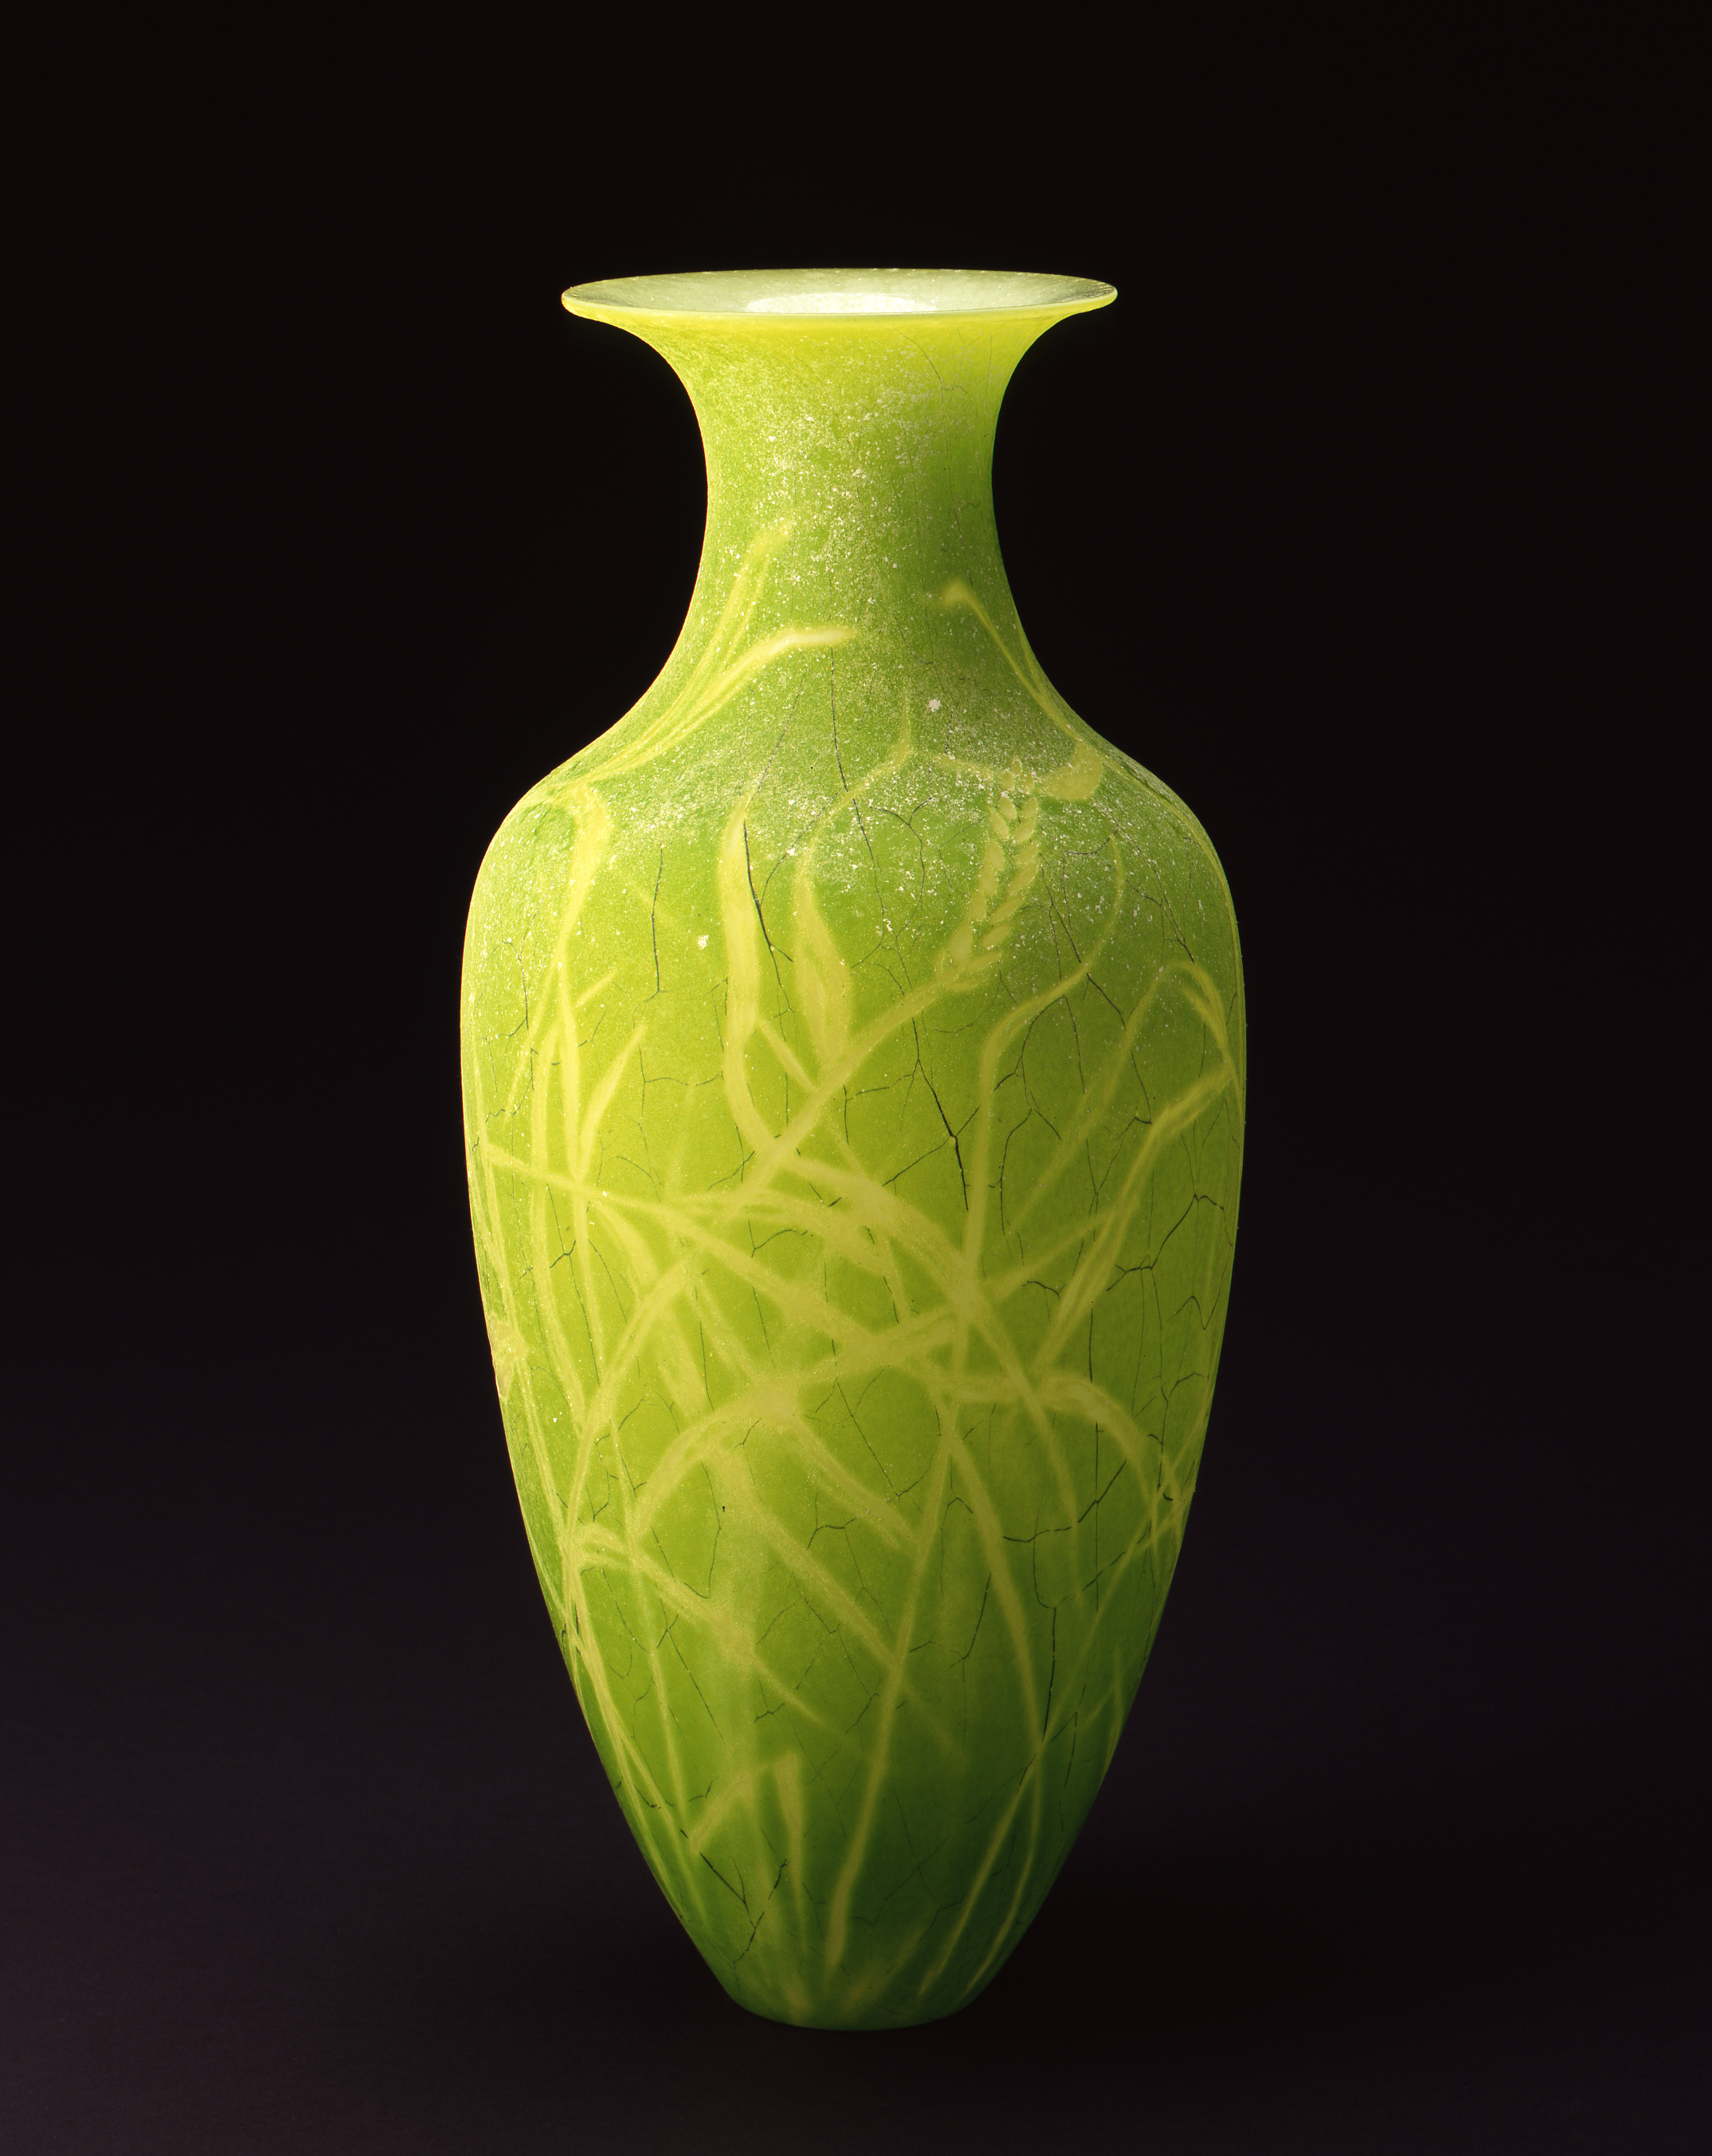  William Morris,&nbsp; Vase with Wild Grass (Green)&nbsp; (2004, glass, 18 5/8 x 8 1/2 x 8 1/2 inches), WM.20 